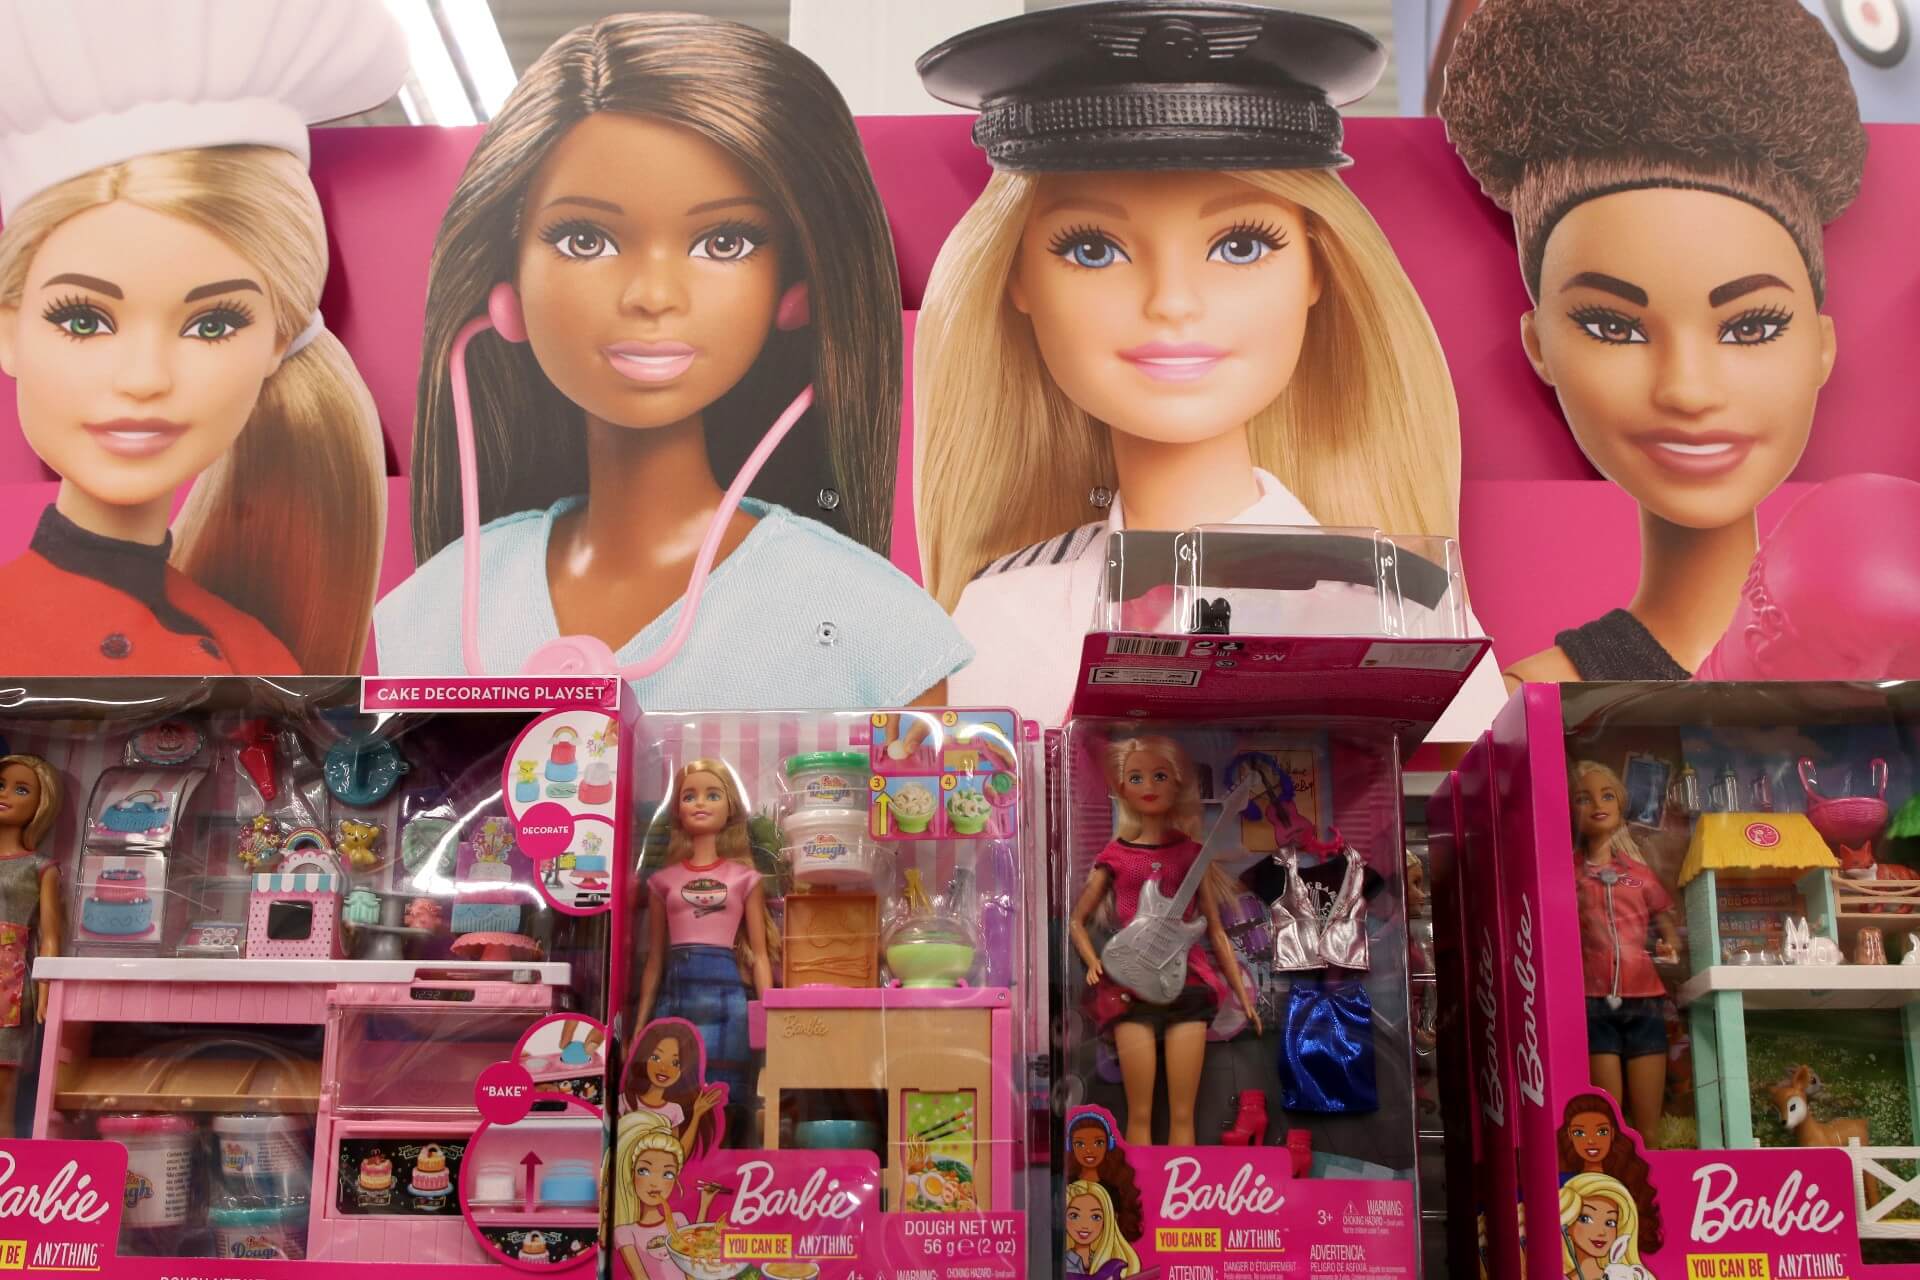 Barbie Profissões